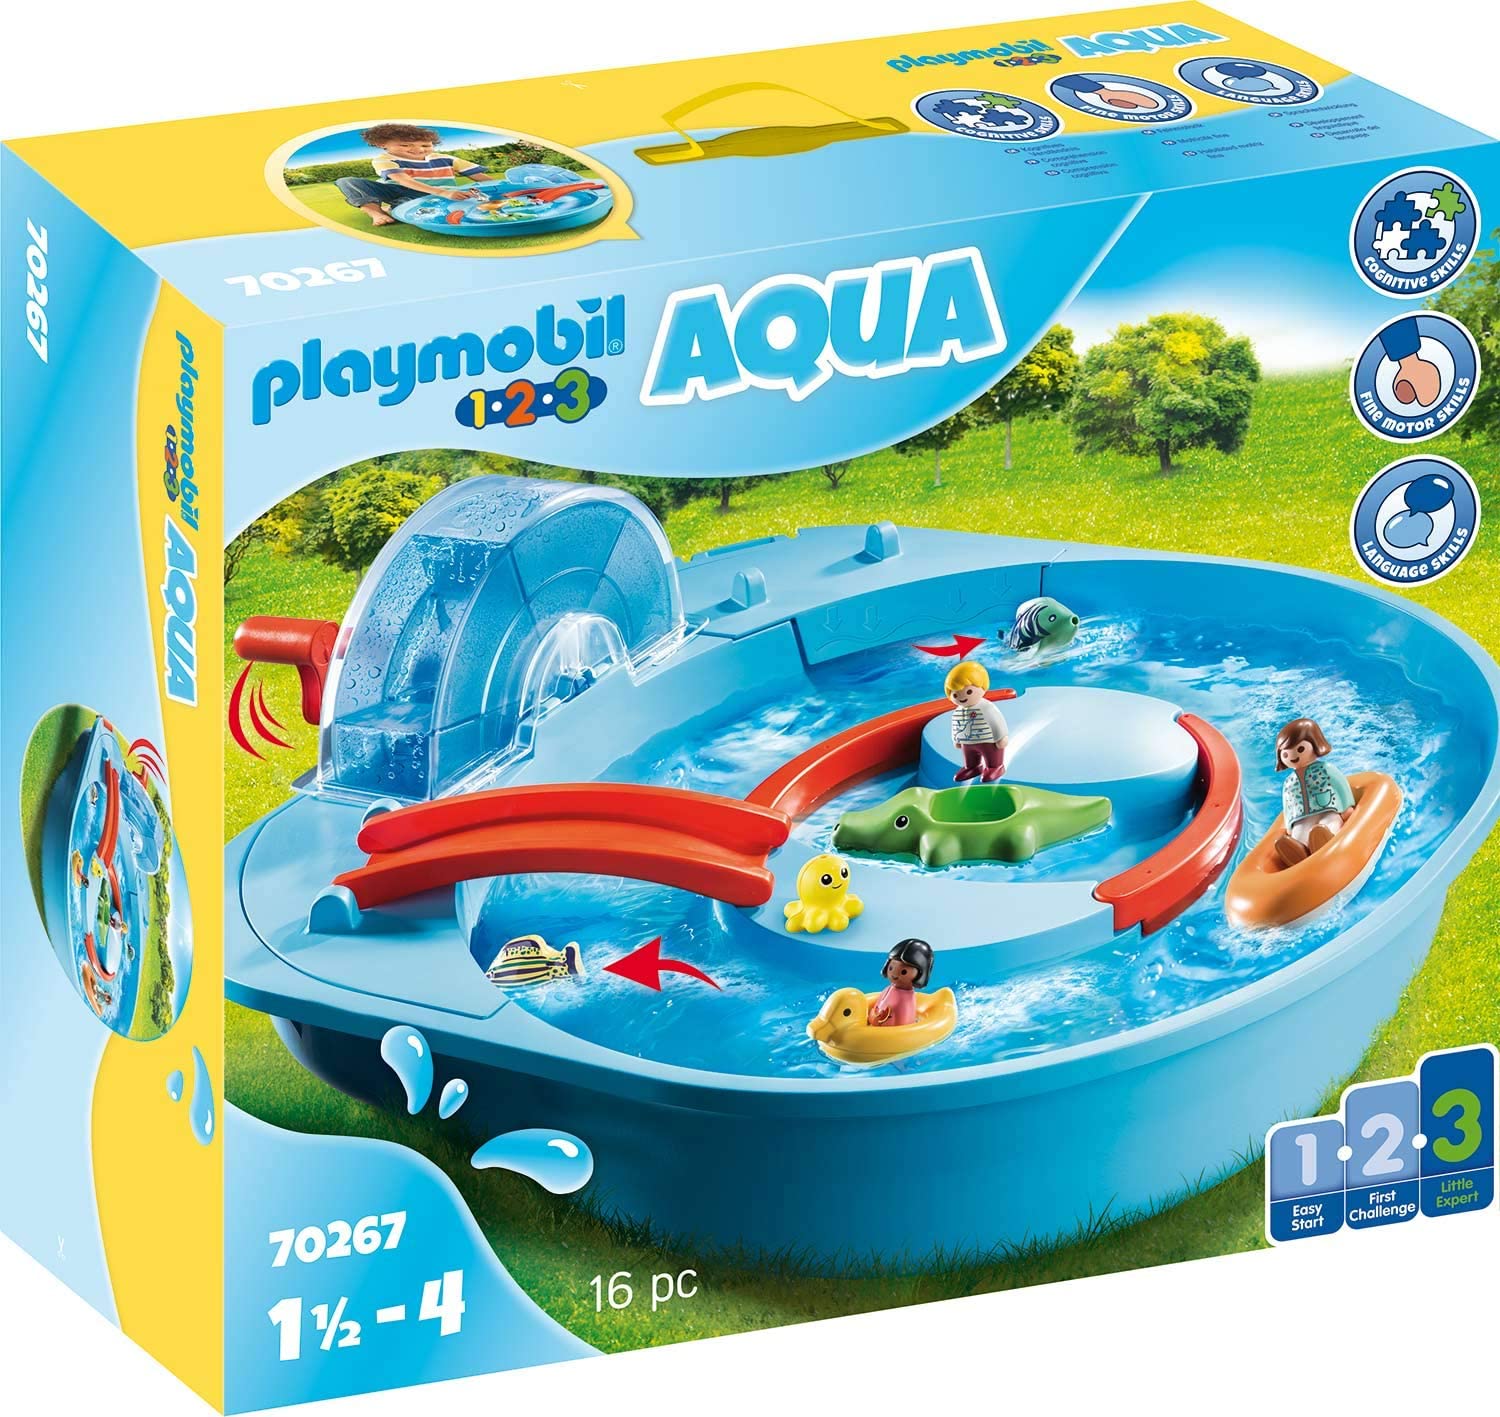 Playmobil 1.2.3 Aqua 70267 Happy Water Range, From 1.5 To 4 Years